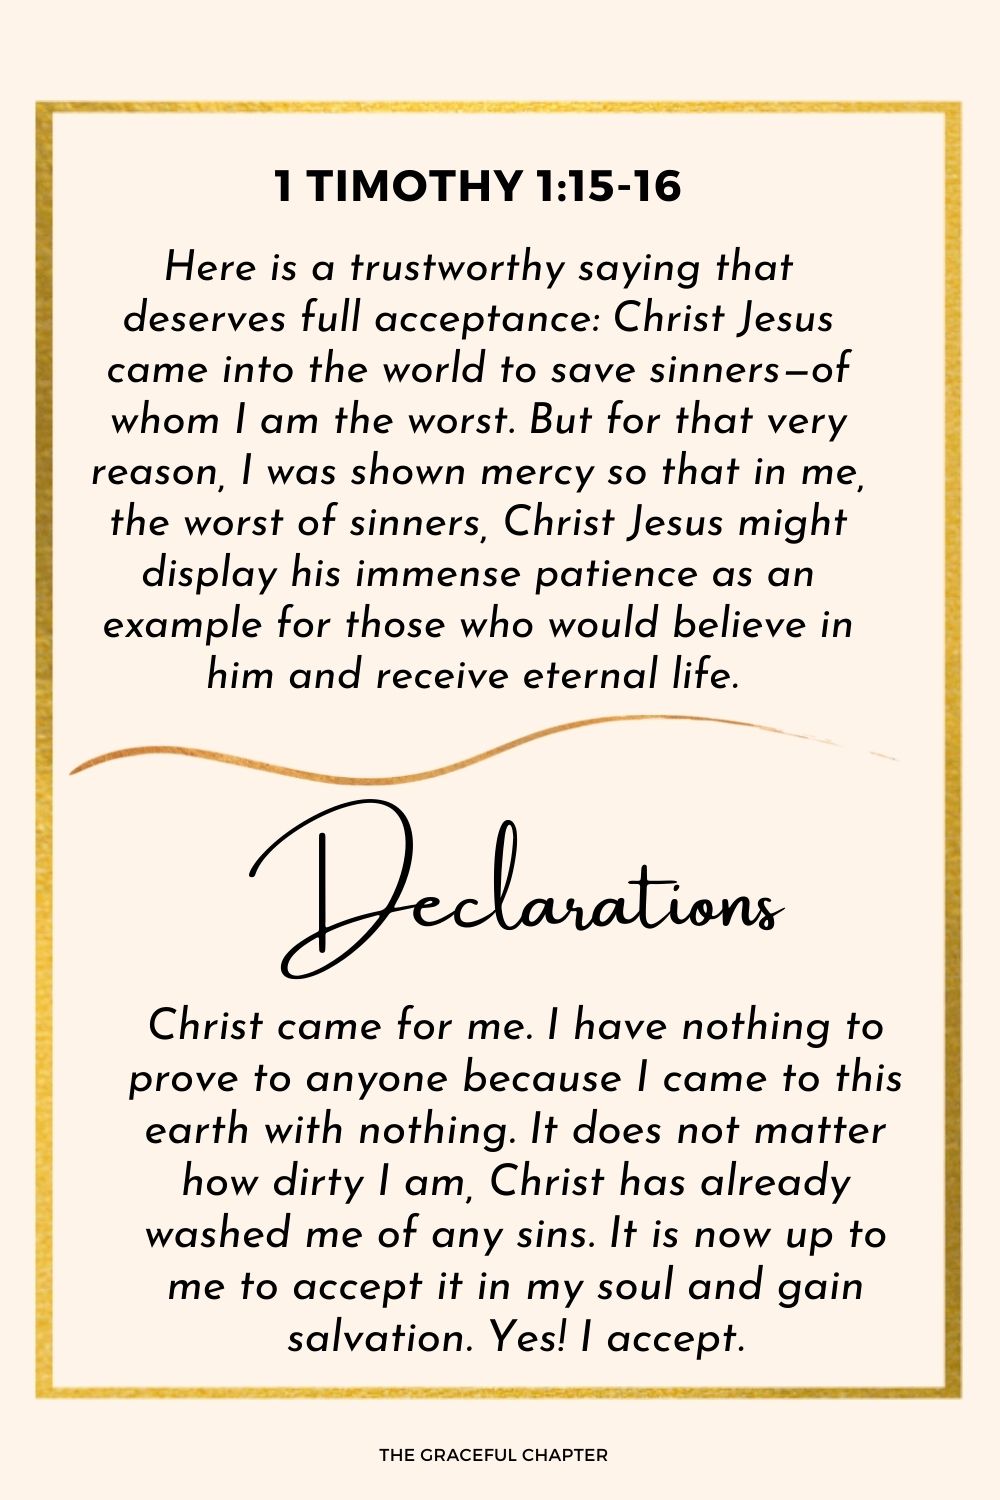 1 Timothy 1:15-16 declaration